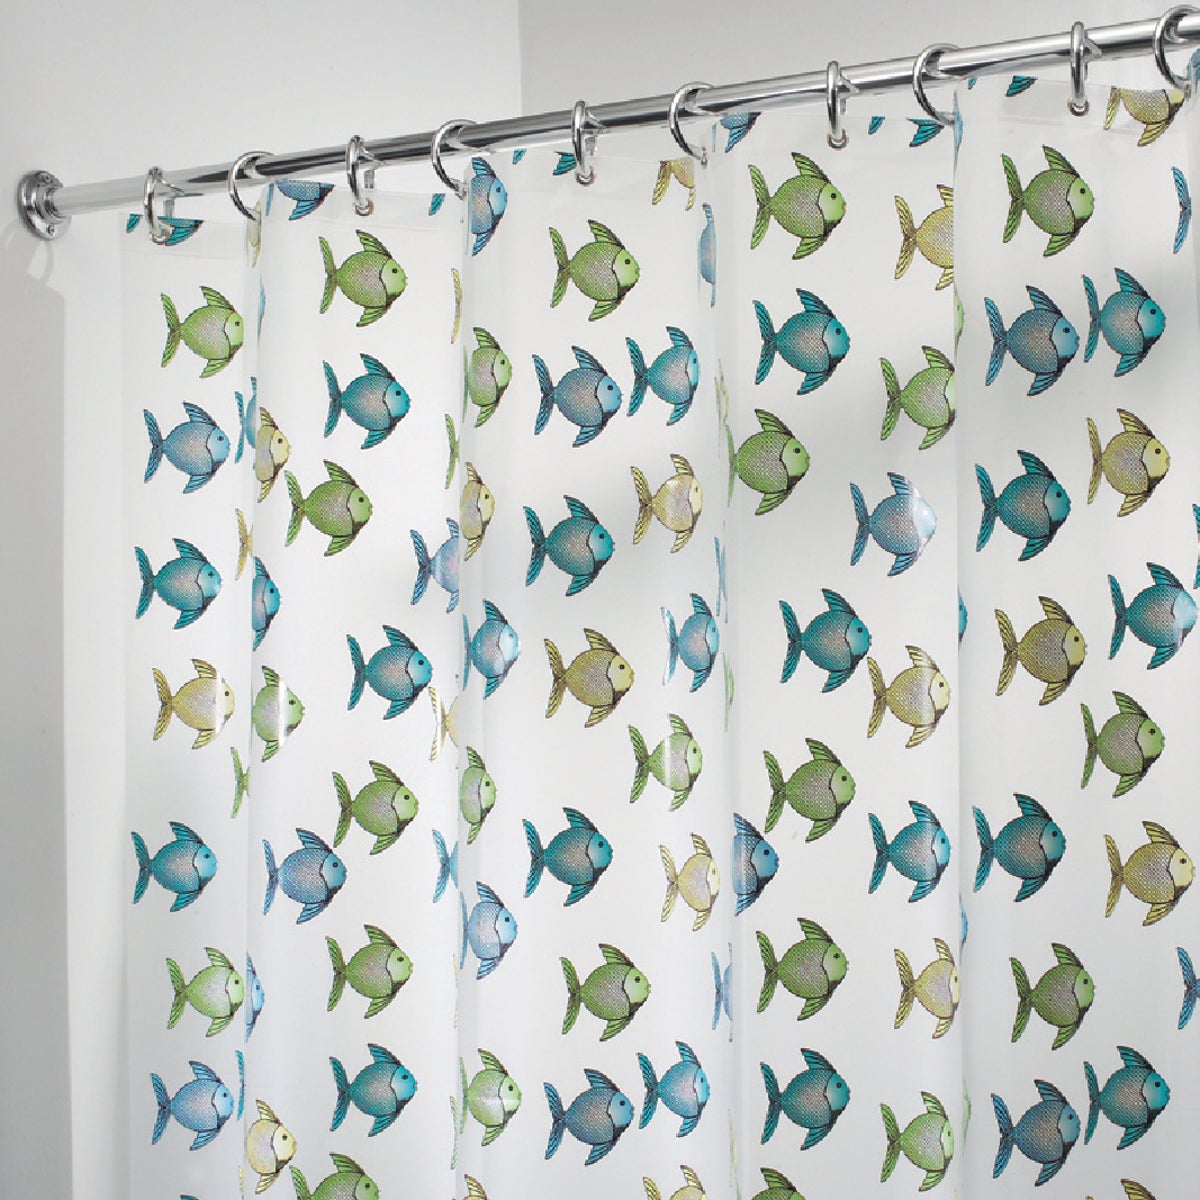 iDesign York Graphic 72 In. x 72 In. Blue/Green Fish Eva Shower Curtain